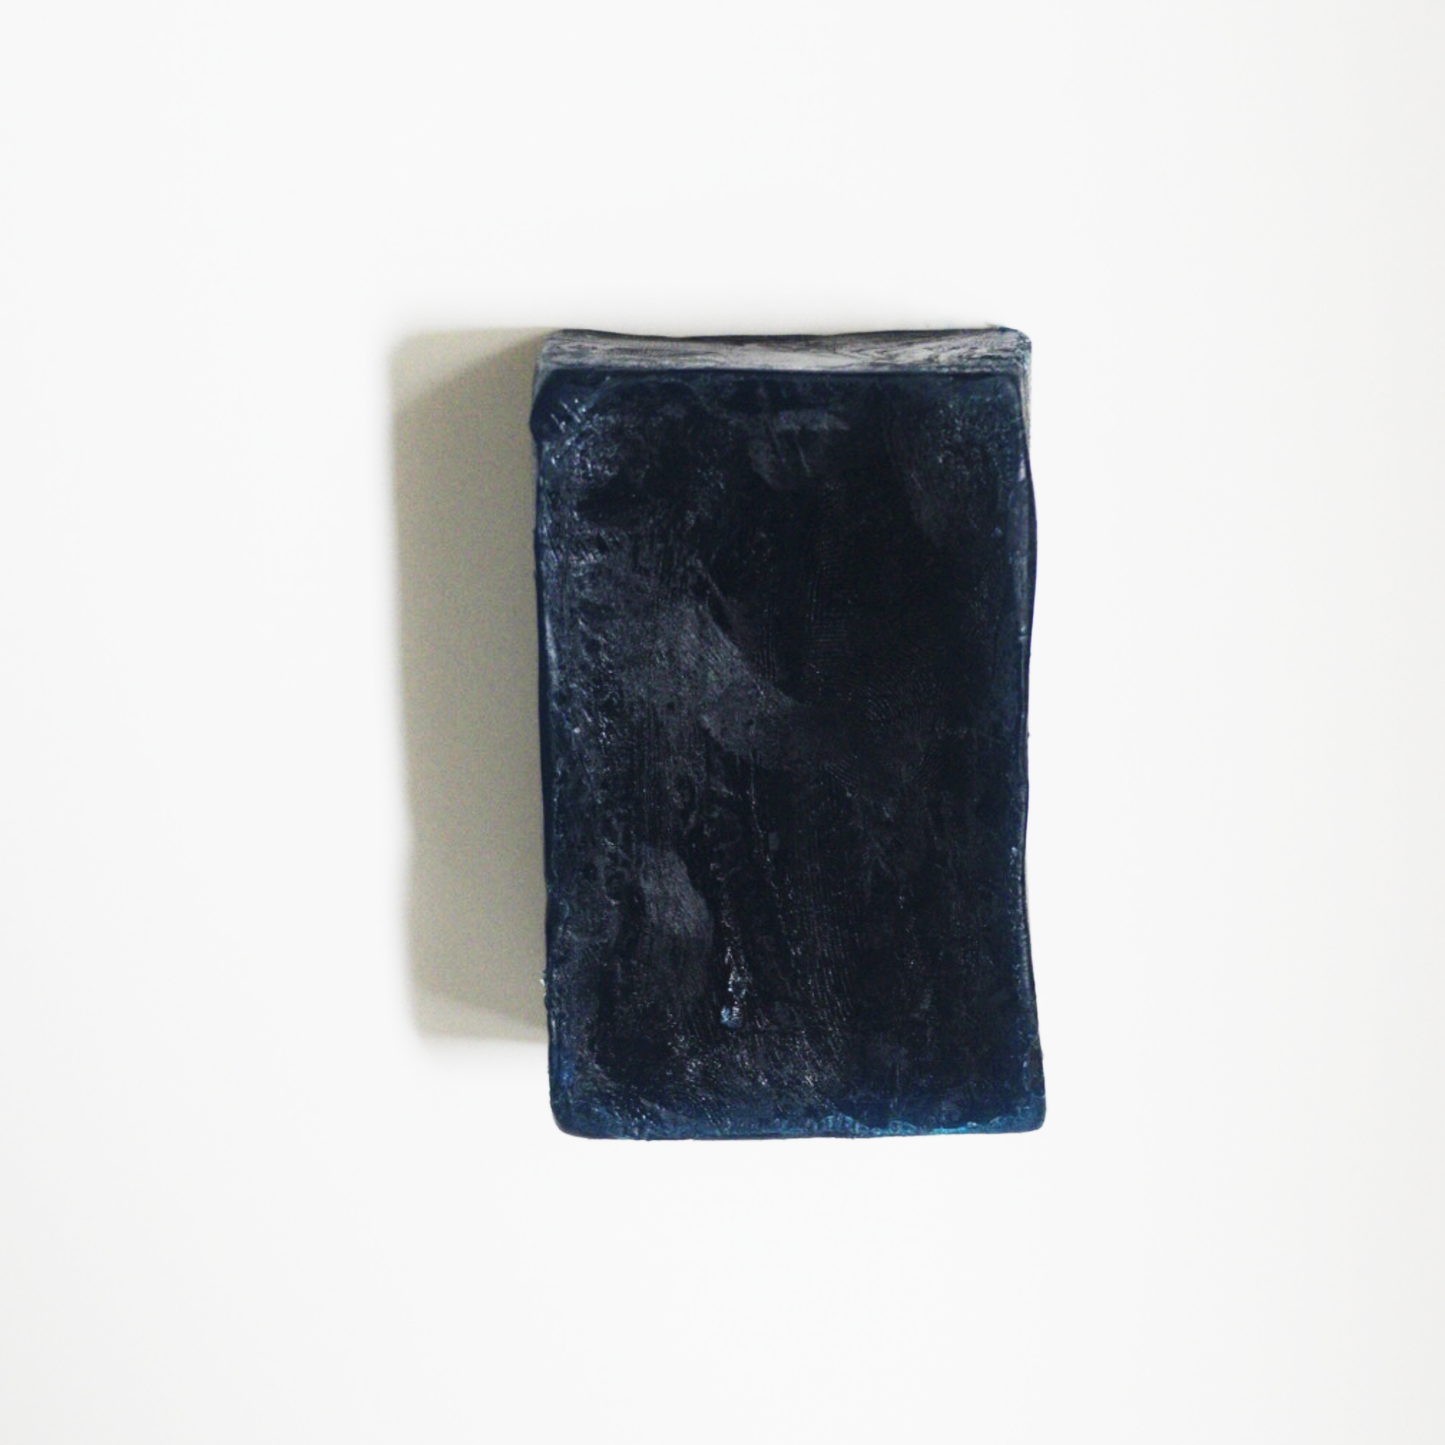 blue nila soap